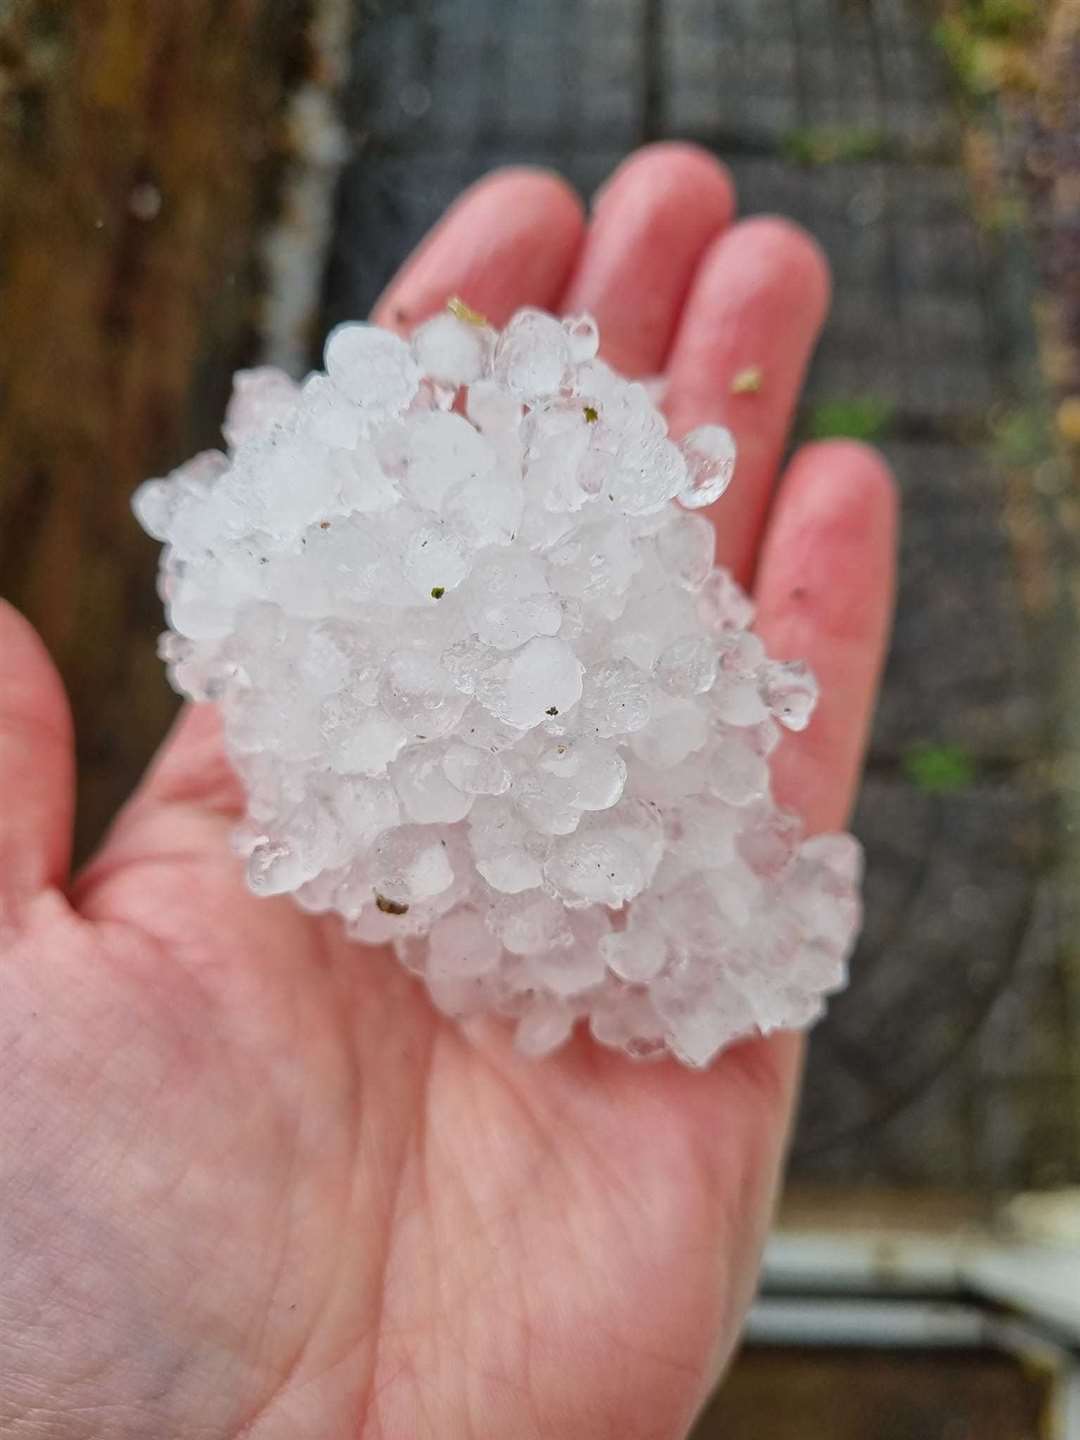 Teri Ella Graham found giant hailstones after the storm. Picture: Teri Ella Graham